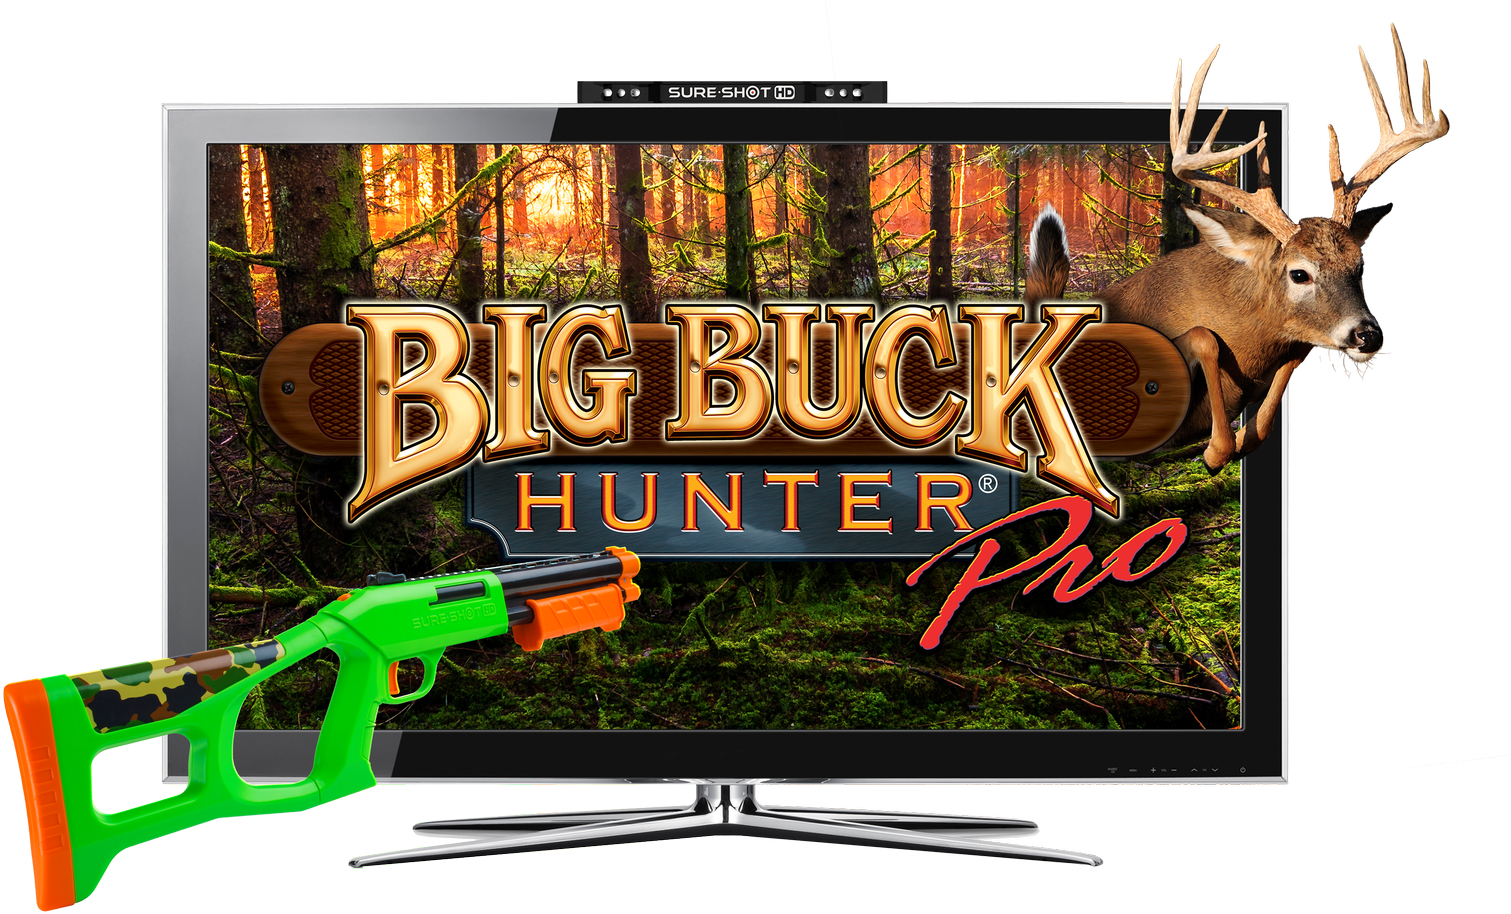 Sure Shot Hd Big Buck Hunter Pro Video Game System, - Big Buck Hunter (1600x975), Png Download